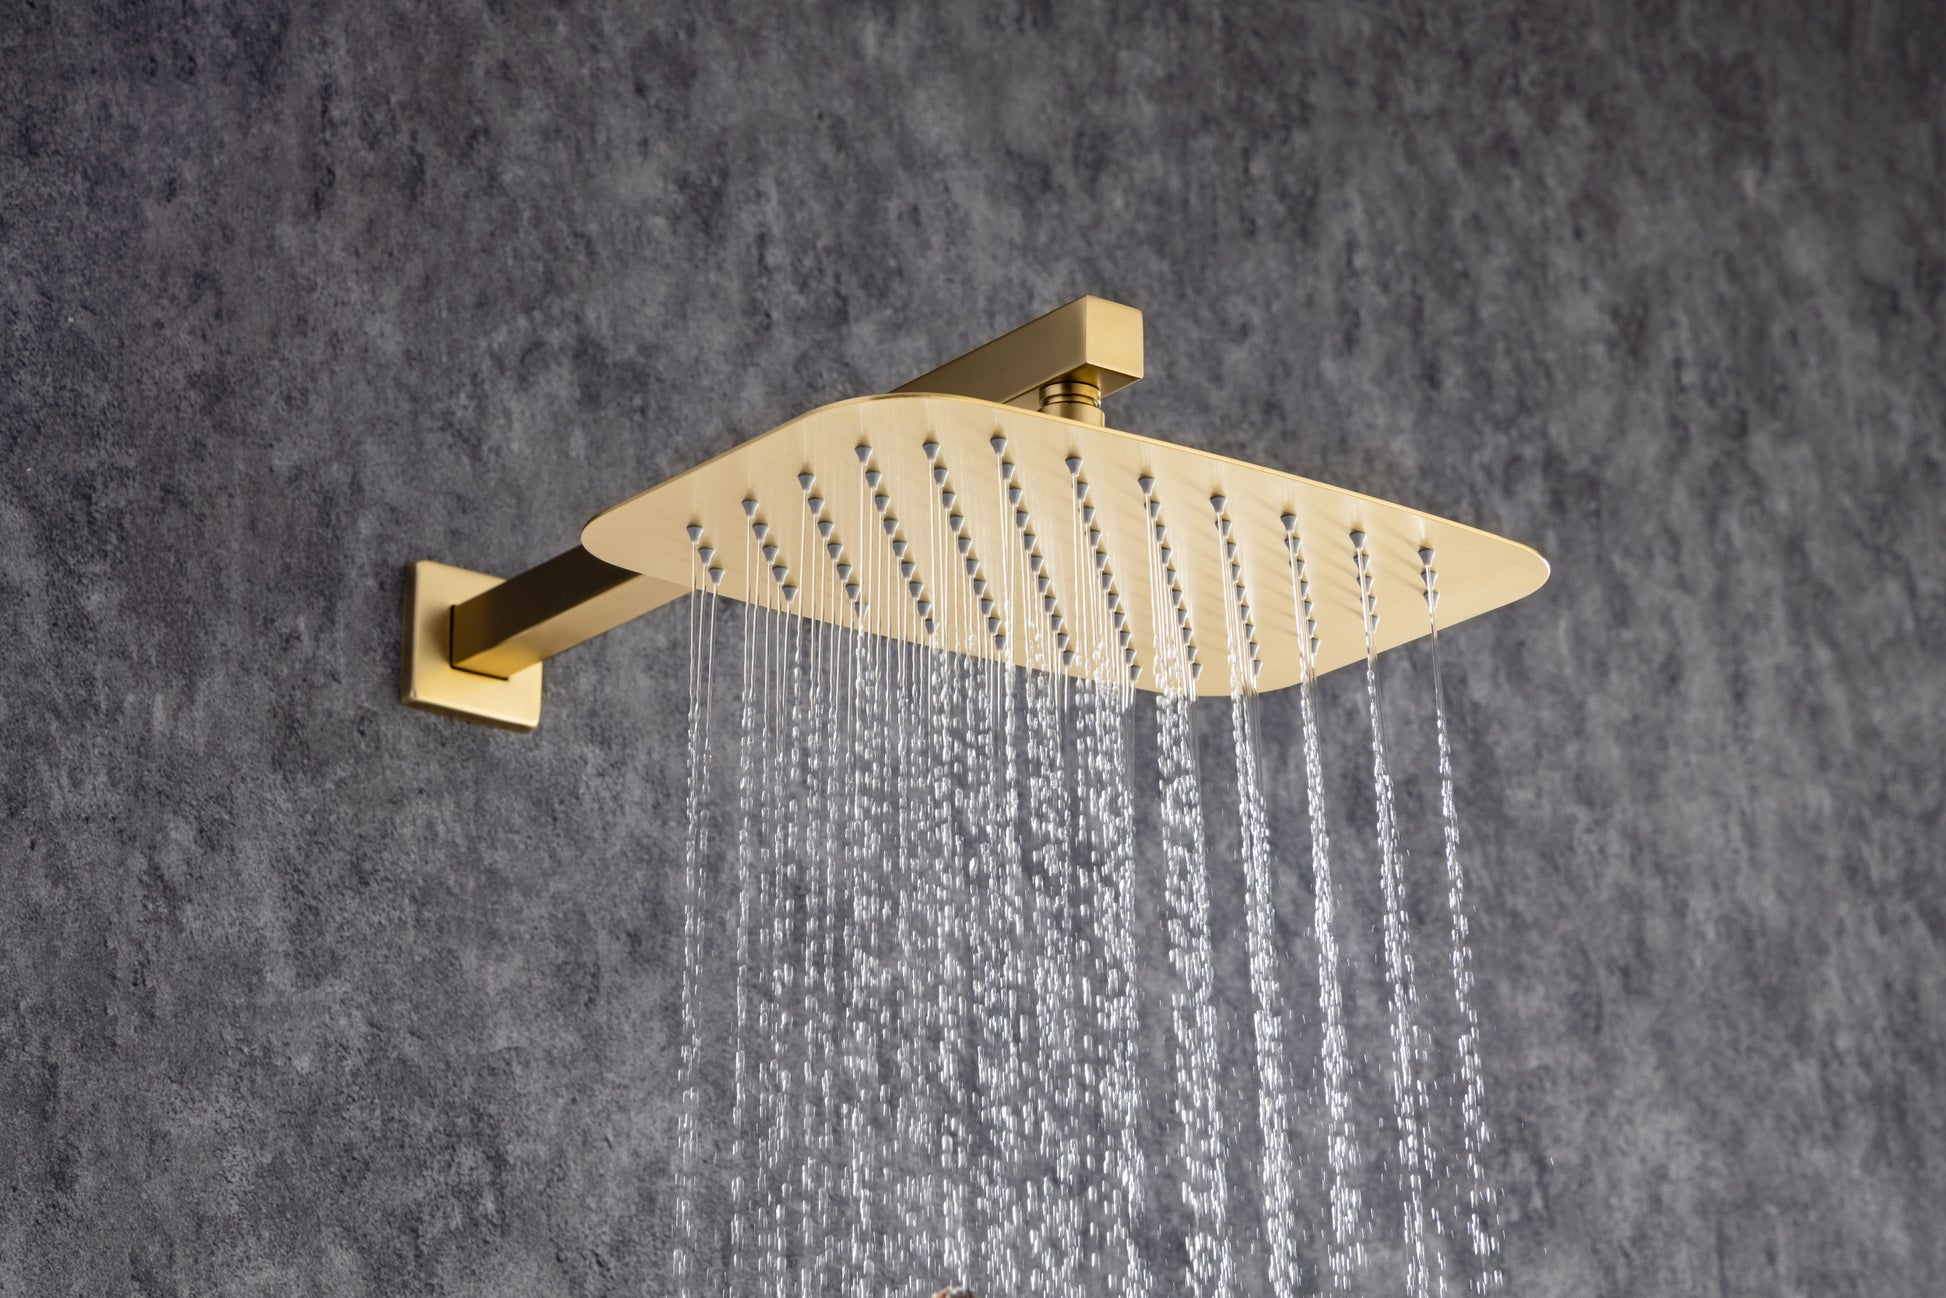 Shower Faucet Set 3 Function Bathroom Shower Fixtures golden-brass